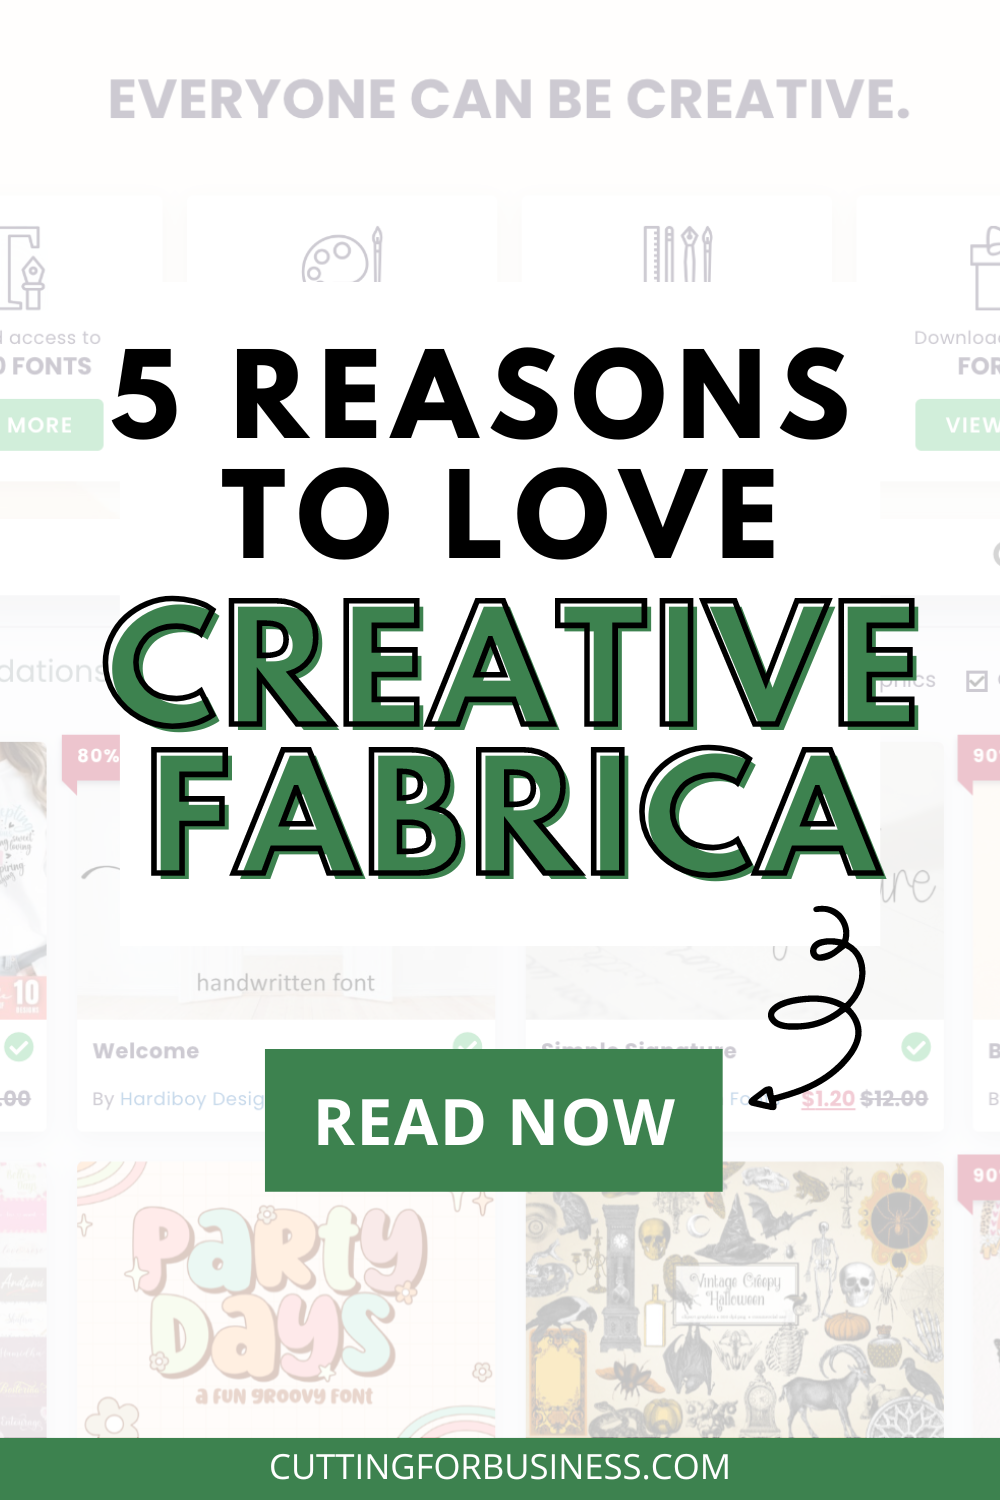 5 Reasons to Love Creative Fabrica - cuttingforbusiness.com.